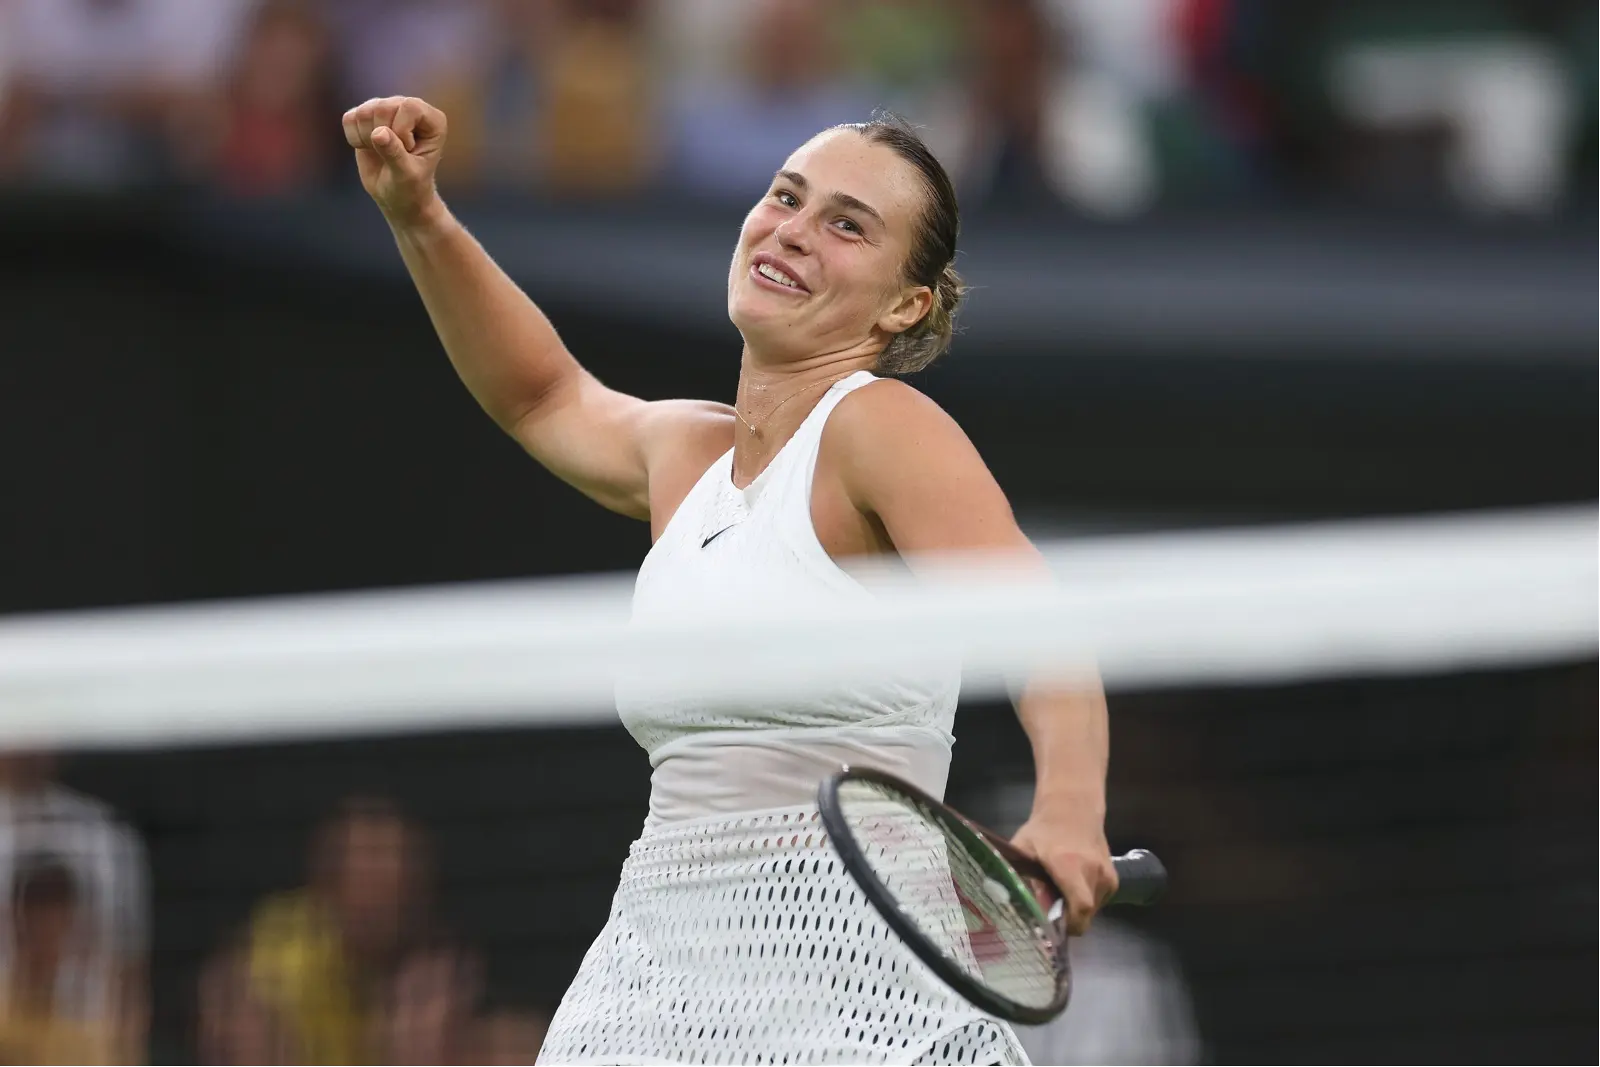 Second-ranked Sabalenka advances to the second round at Wimbledon